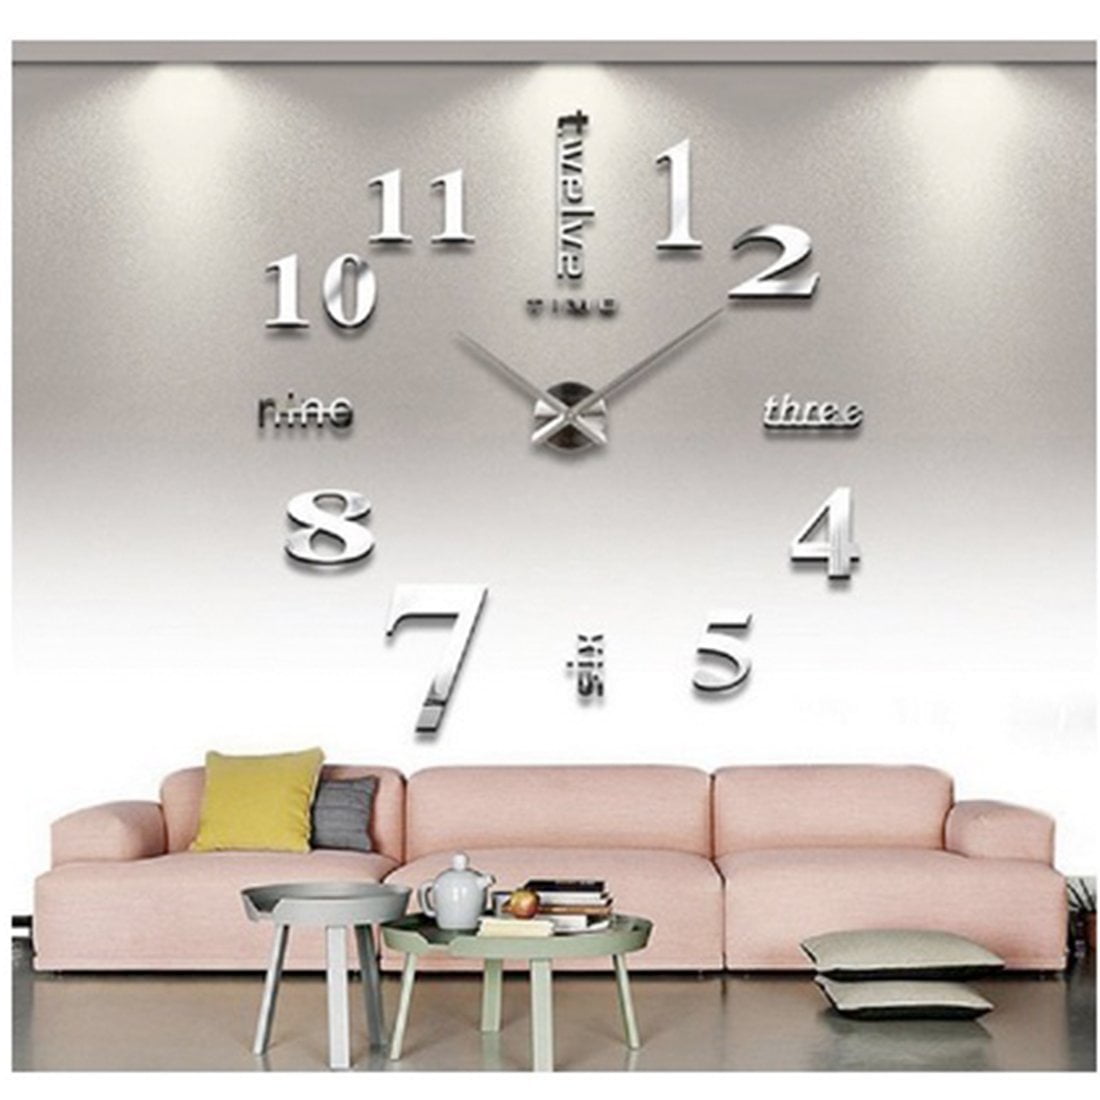 Details about   3D Modern DIY Wall Clock Mirror Creative Removable Art Decal Sticker Home Decor 